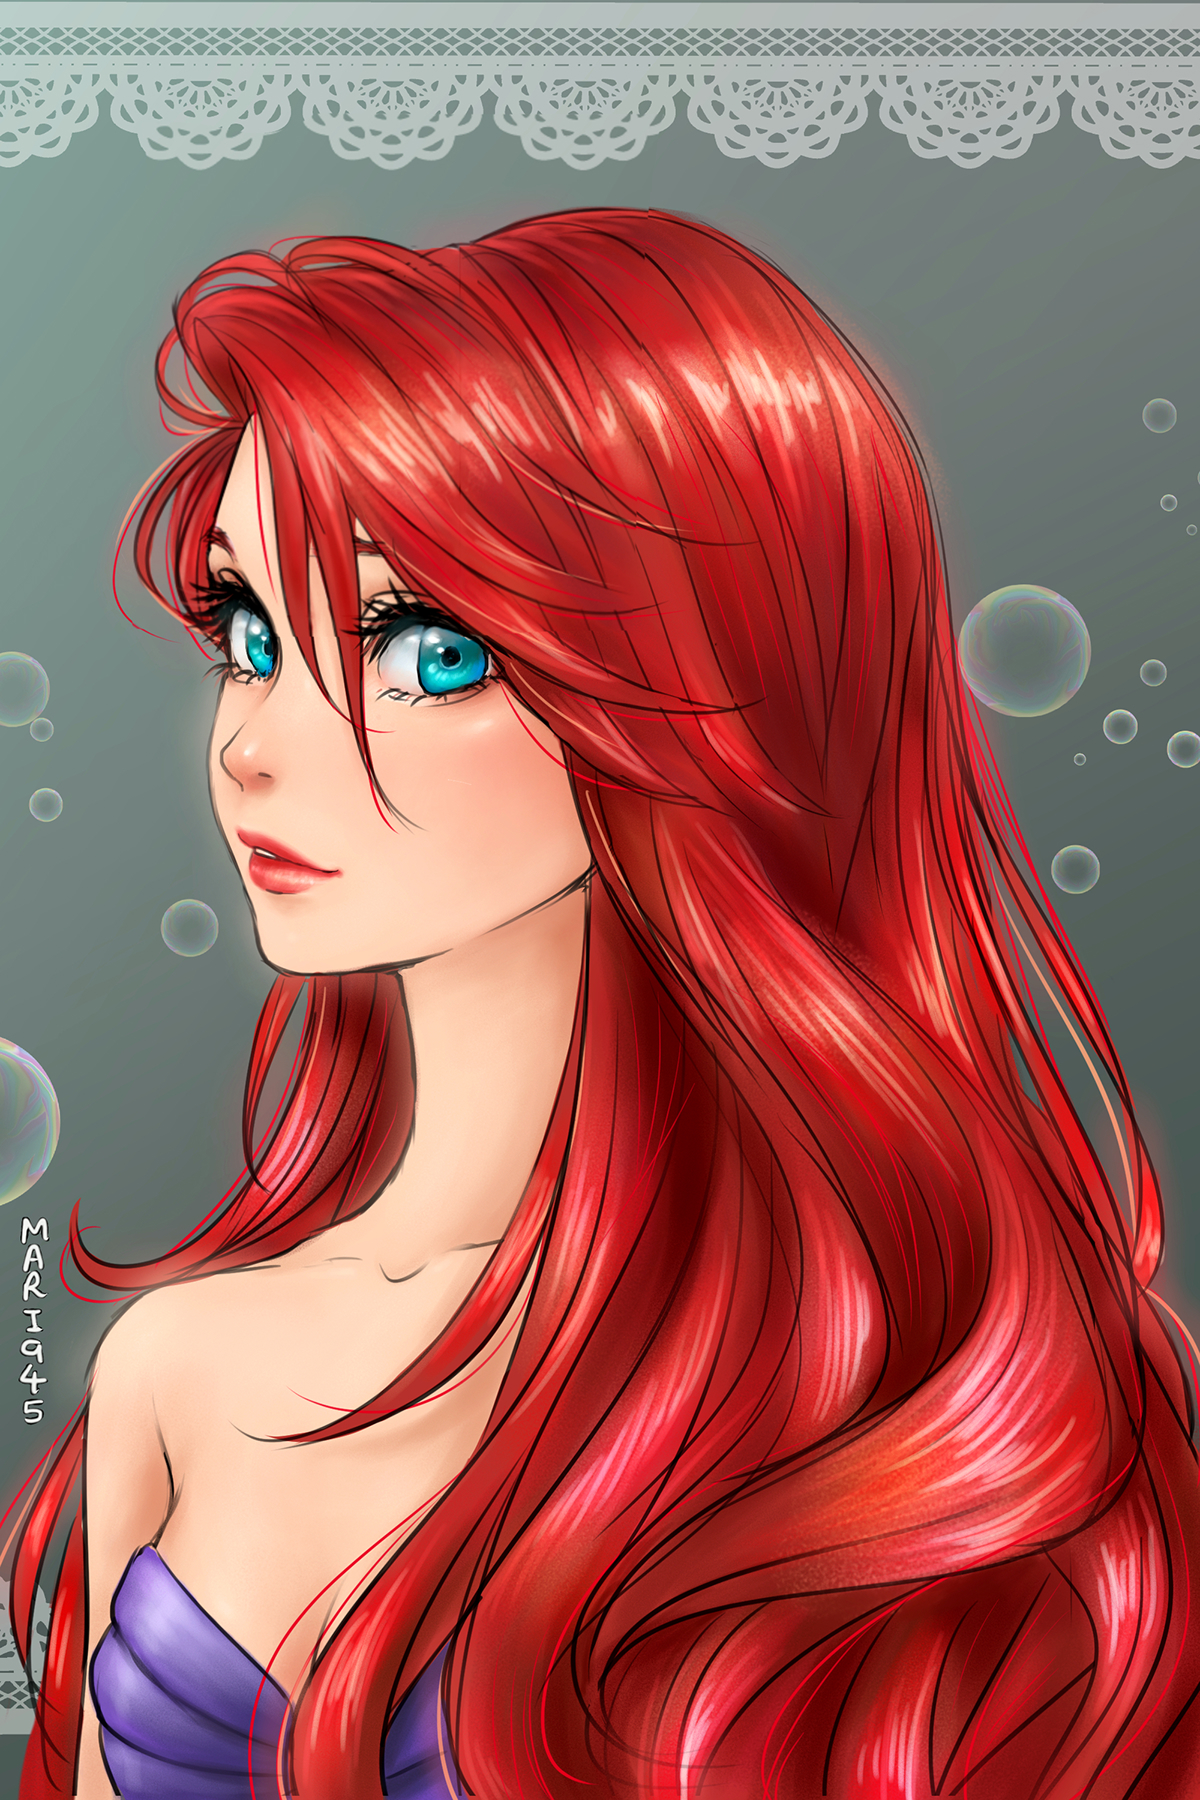 ARIEL The Little Mermaid red head red disney Princess